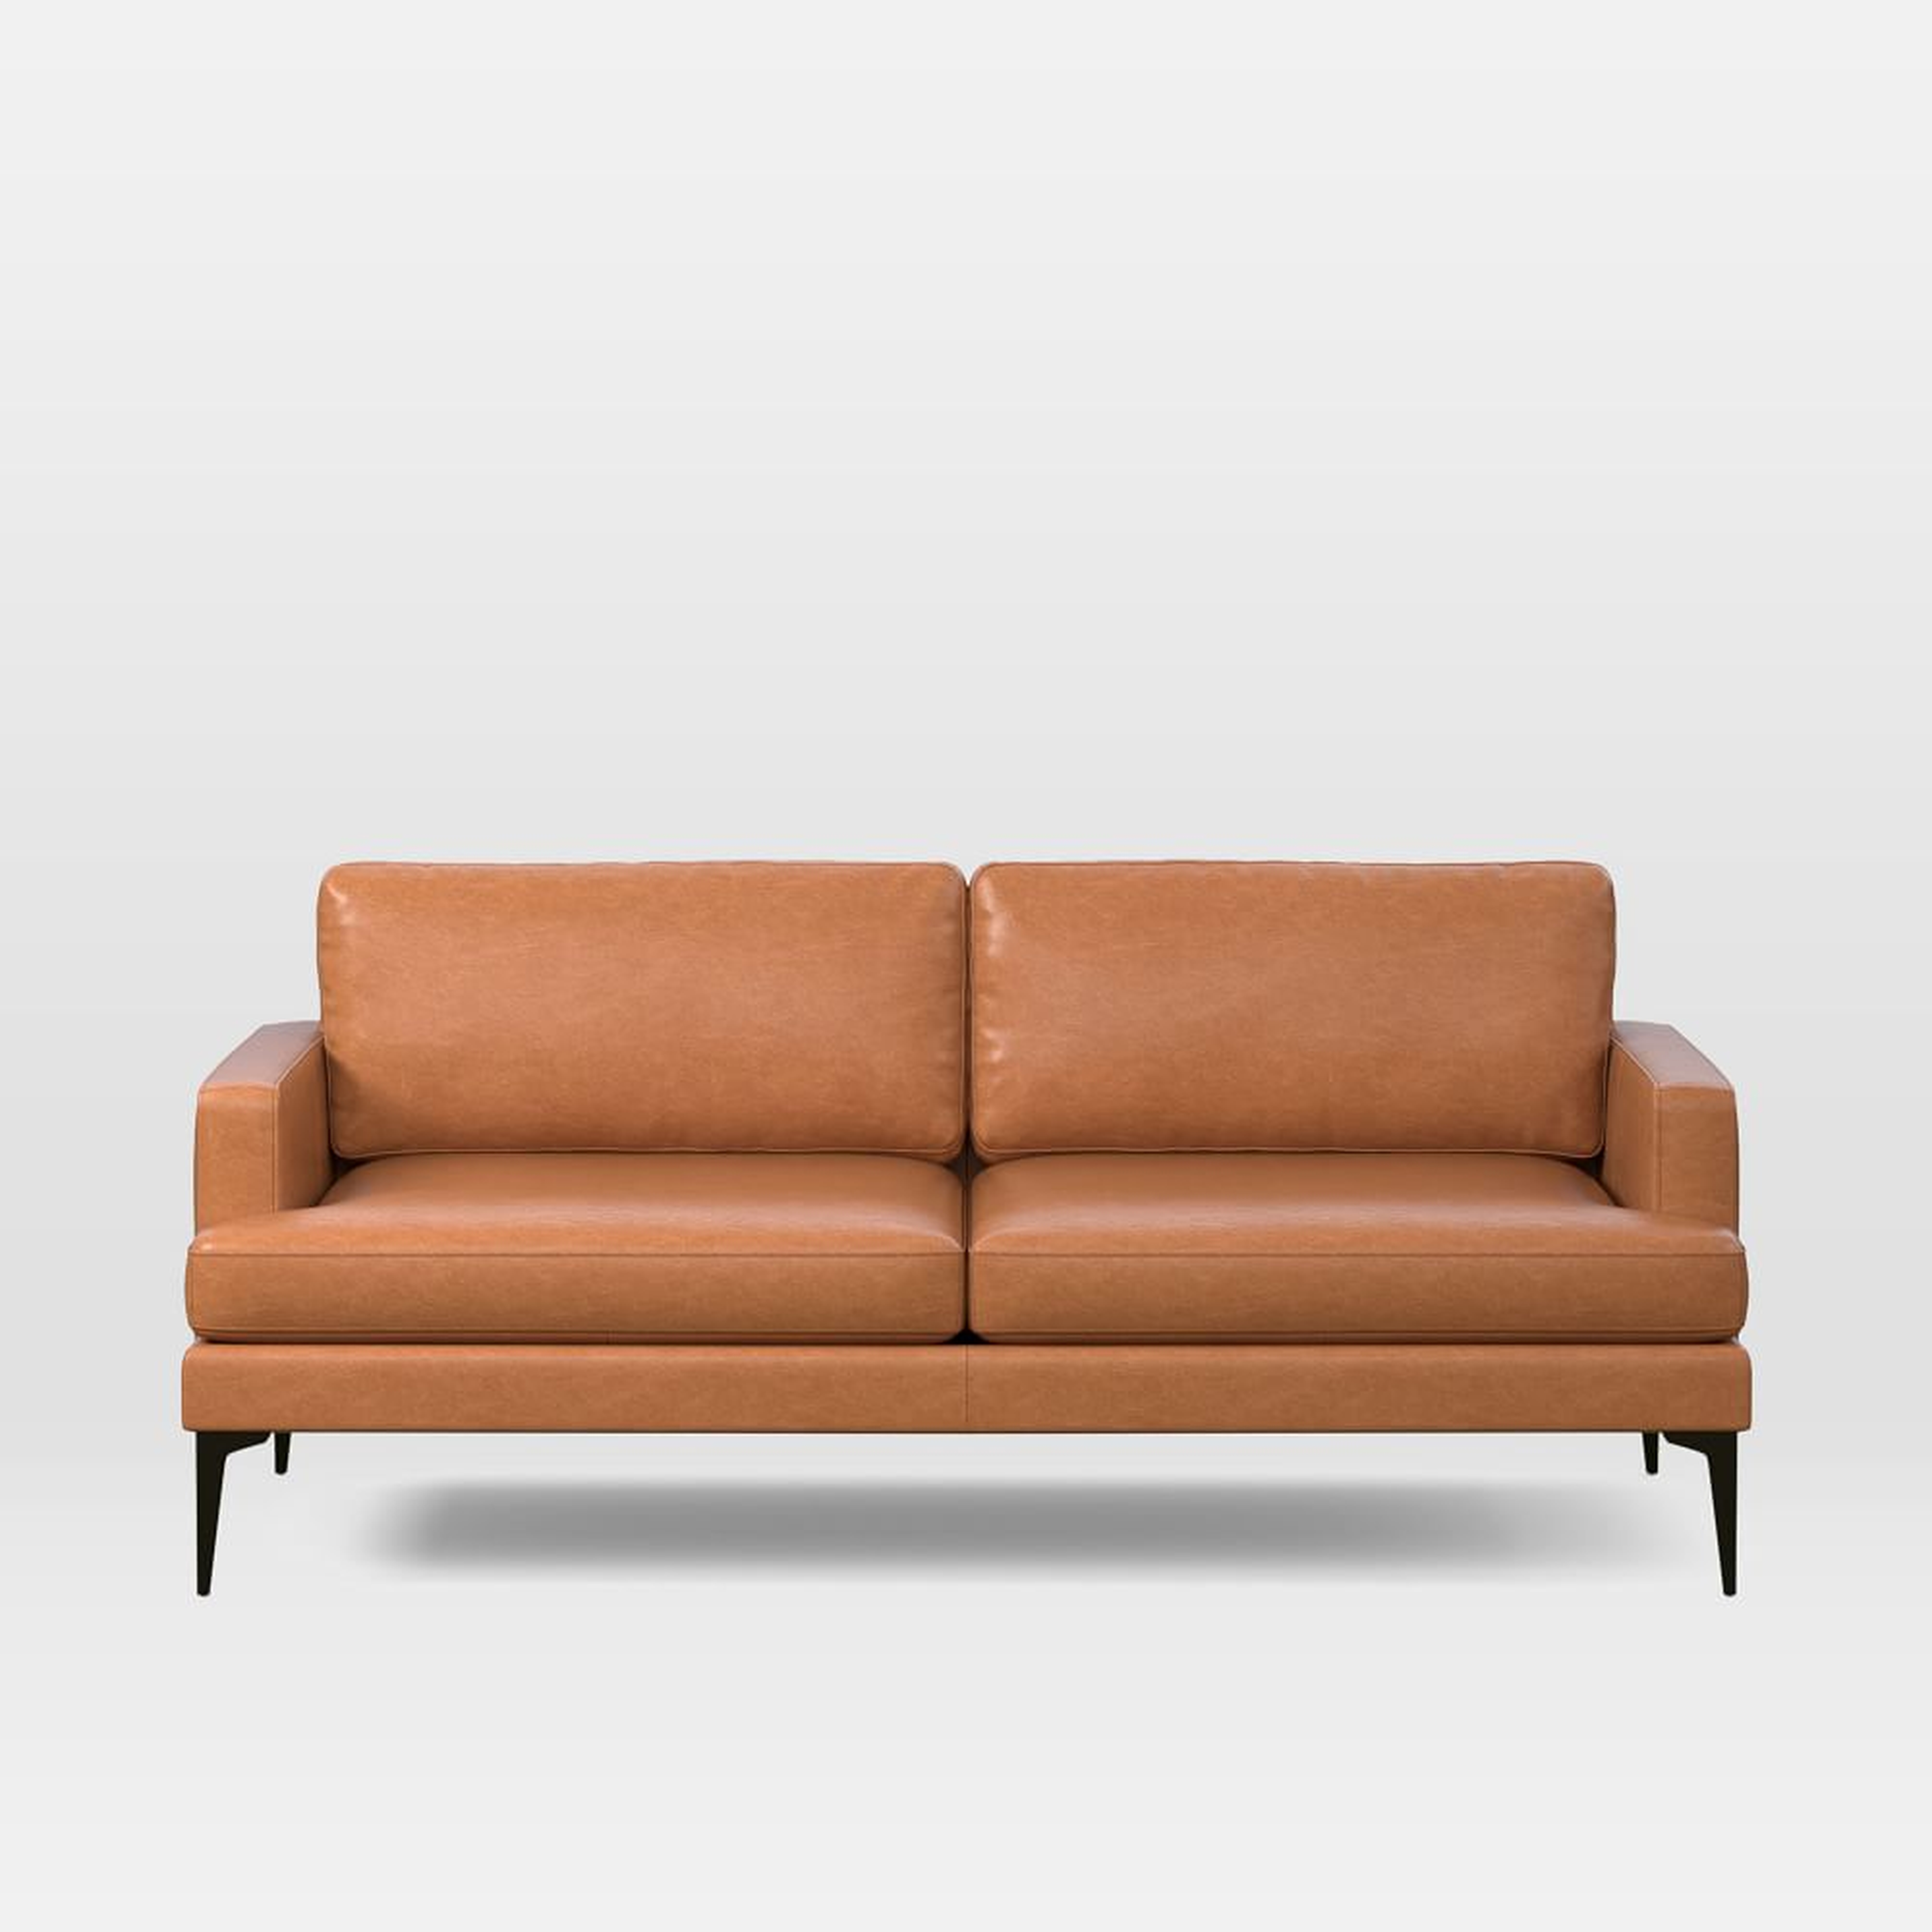 Andes 77" Multi-Seat Sofa, Standard Depth, Saddle Leather, Nut, Dark Pewter - West Elm